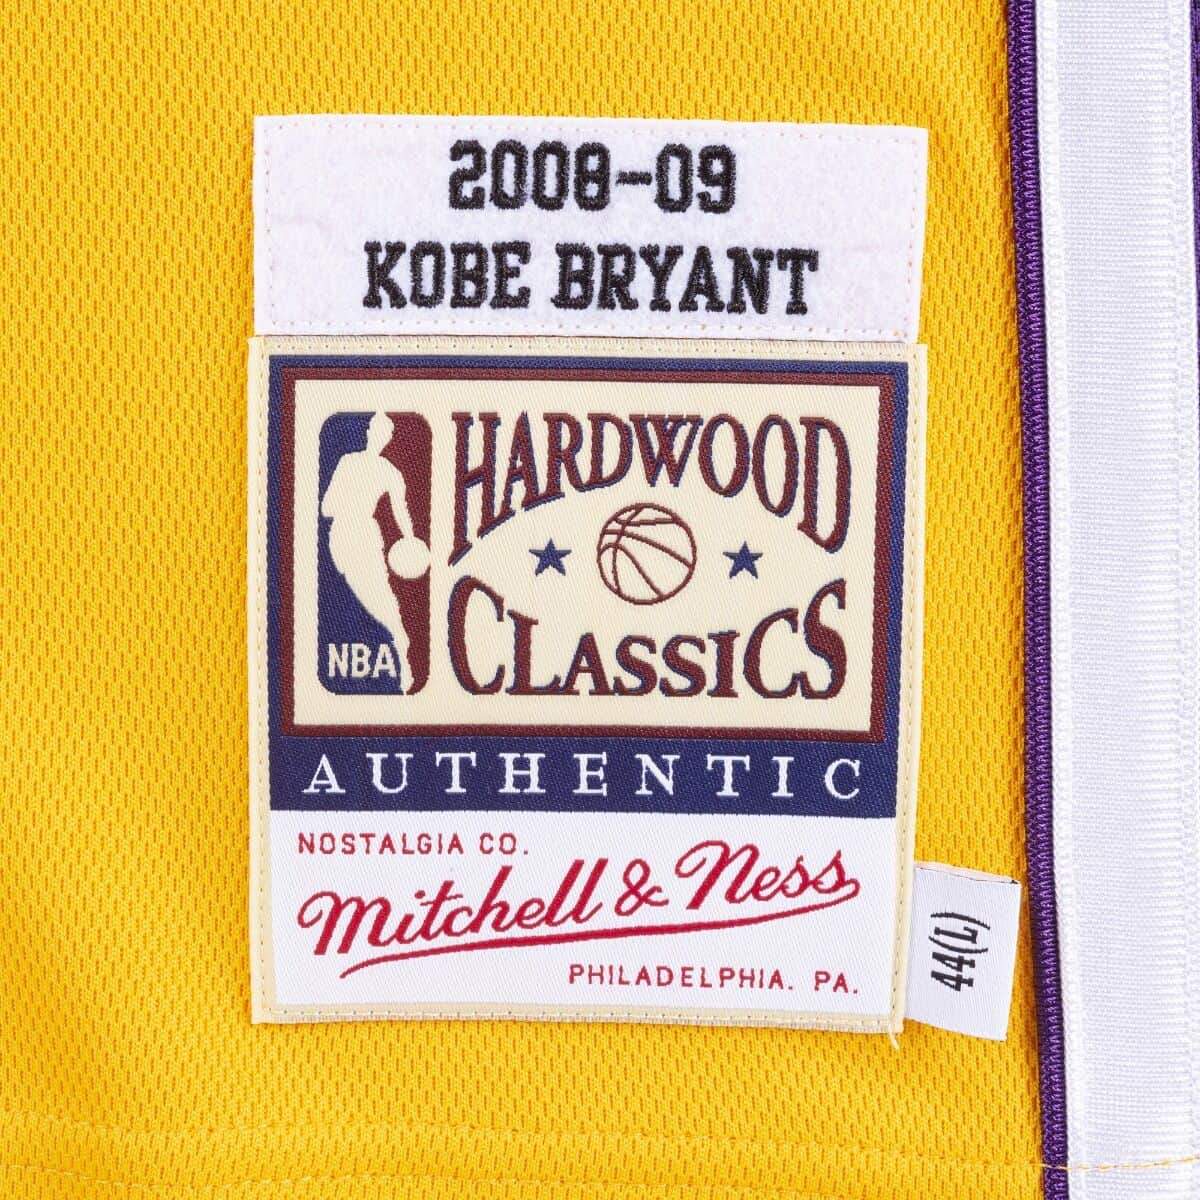 Kobe Bryant 08-09 Authentic Hardwood Classic Jersey